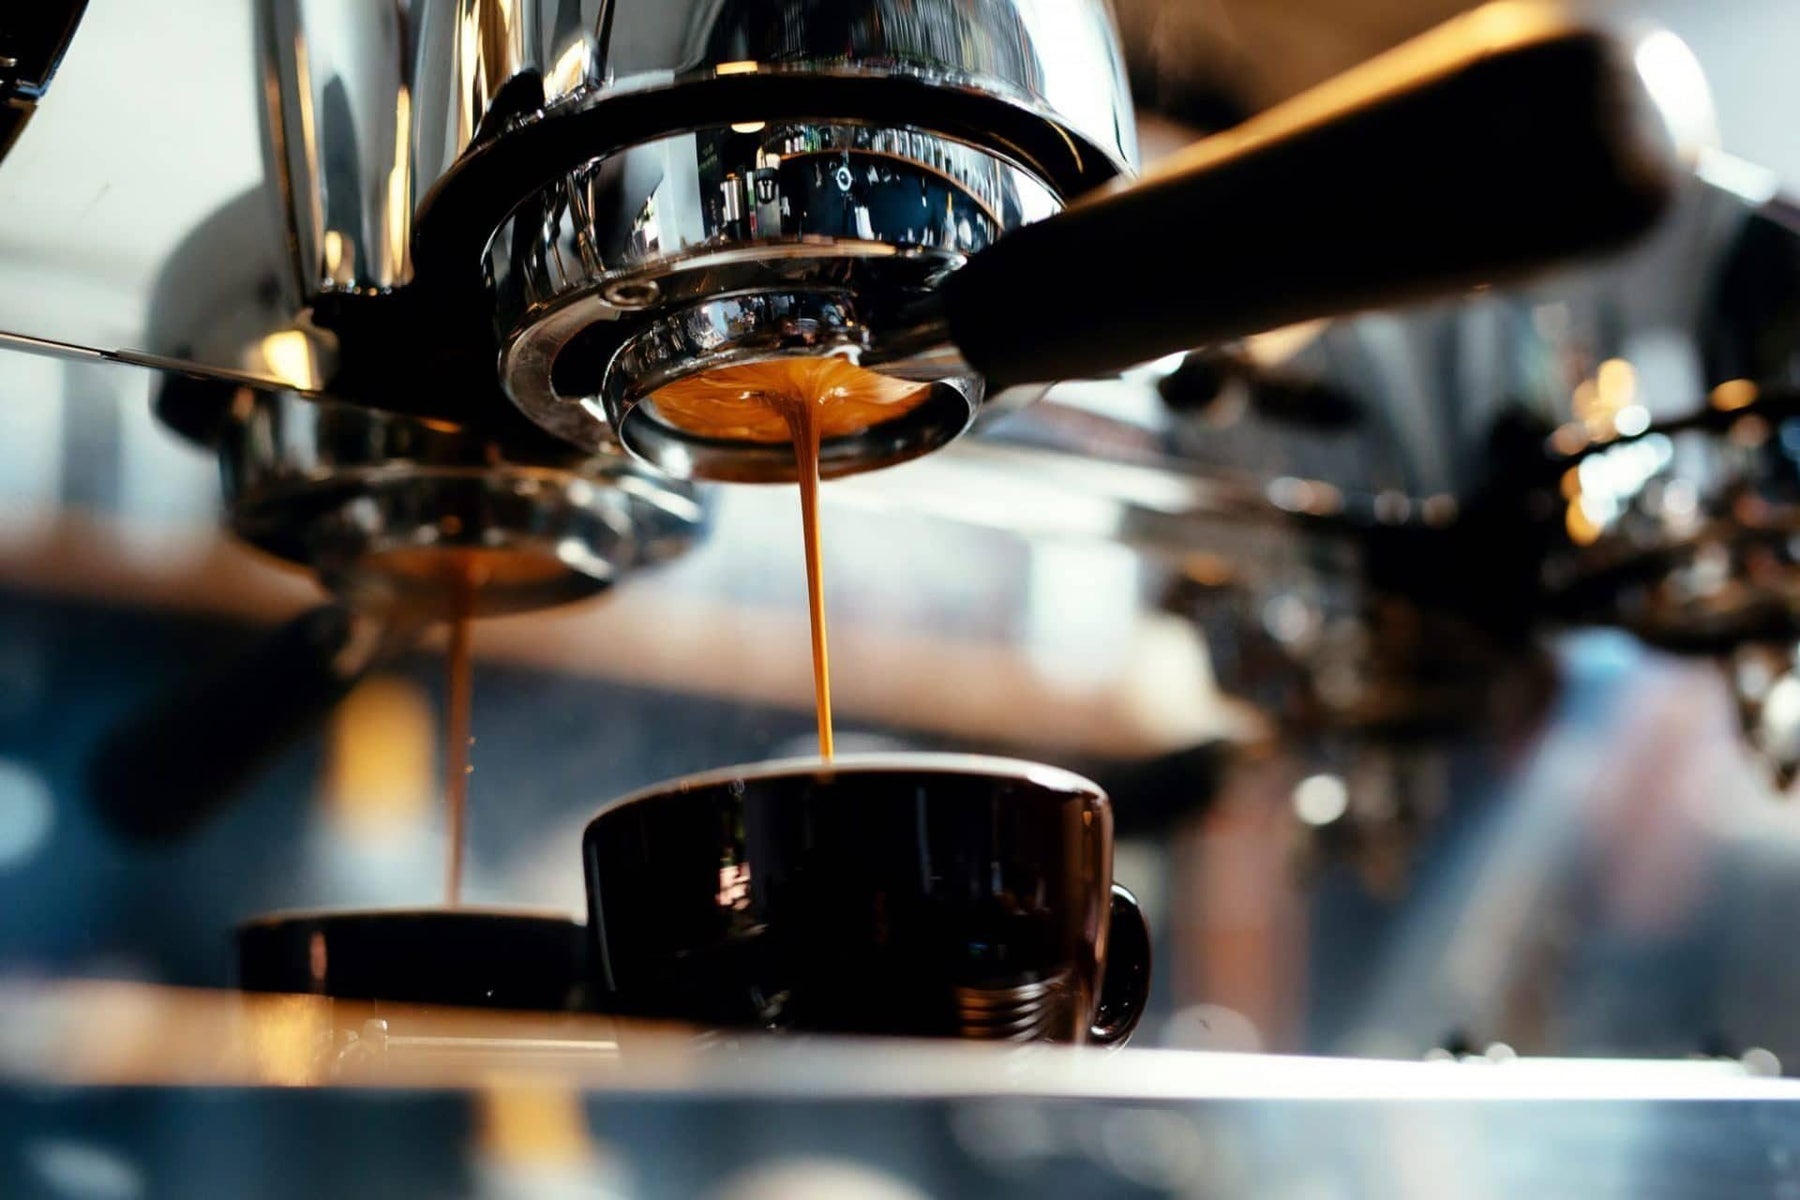 Machine à espresso manuelle vs machine automatique?